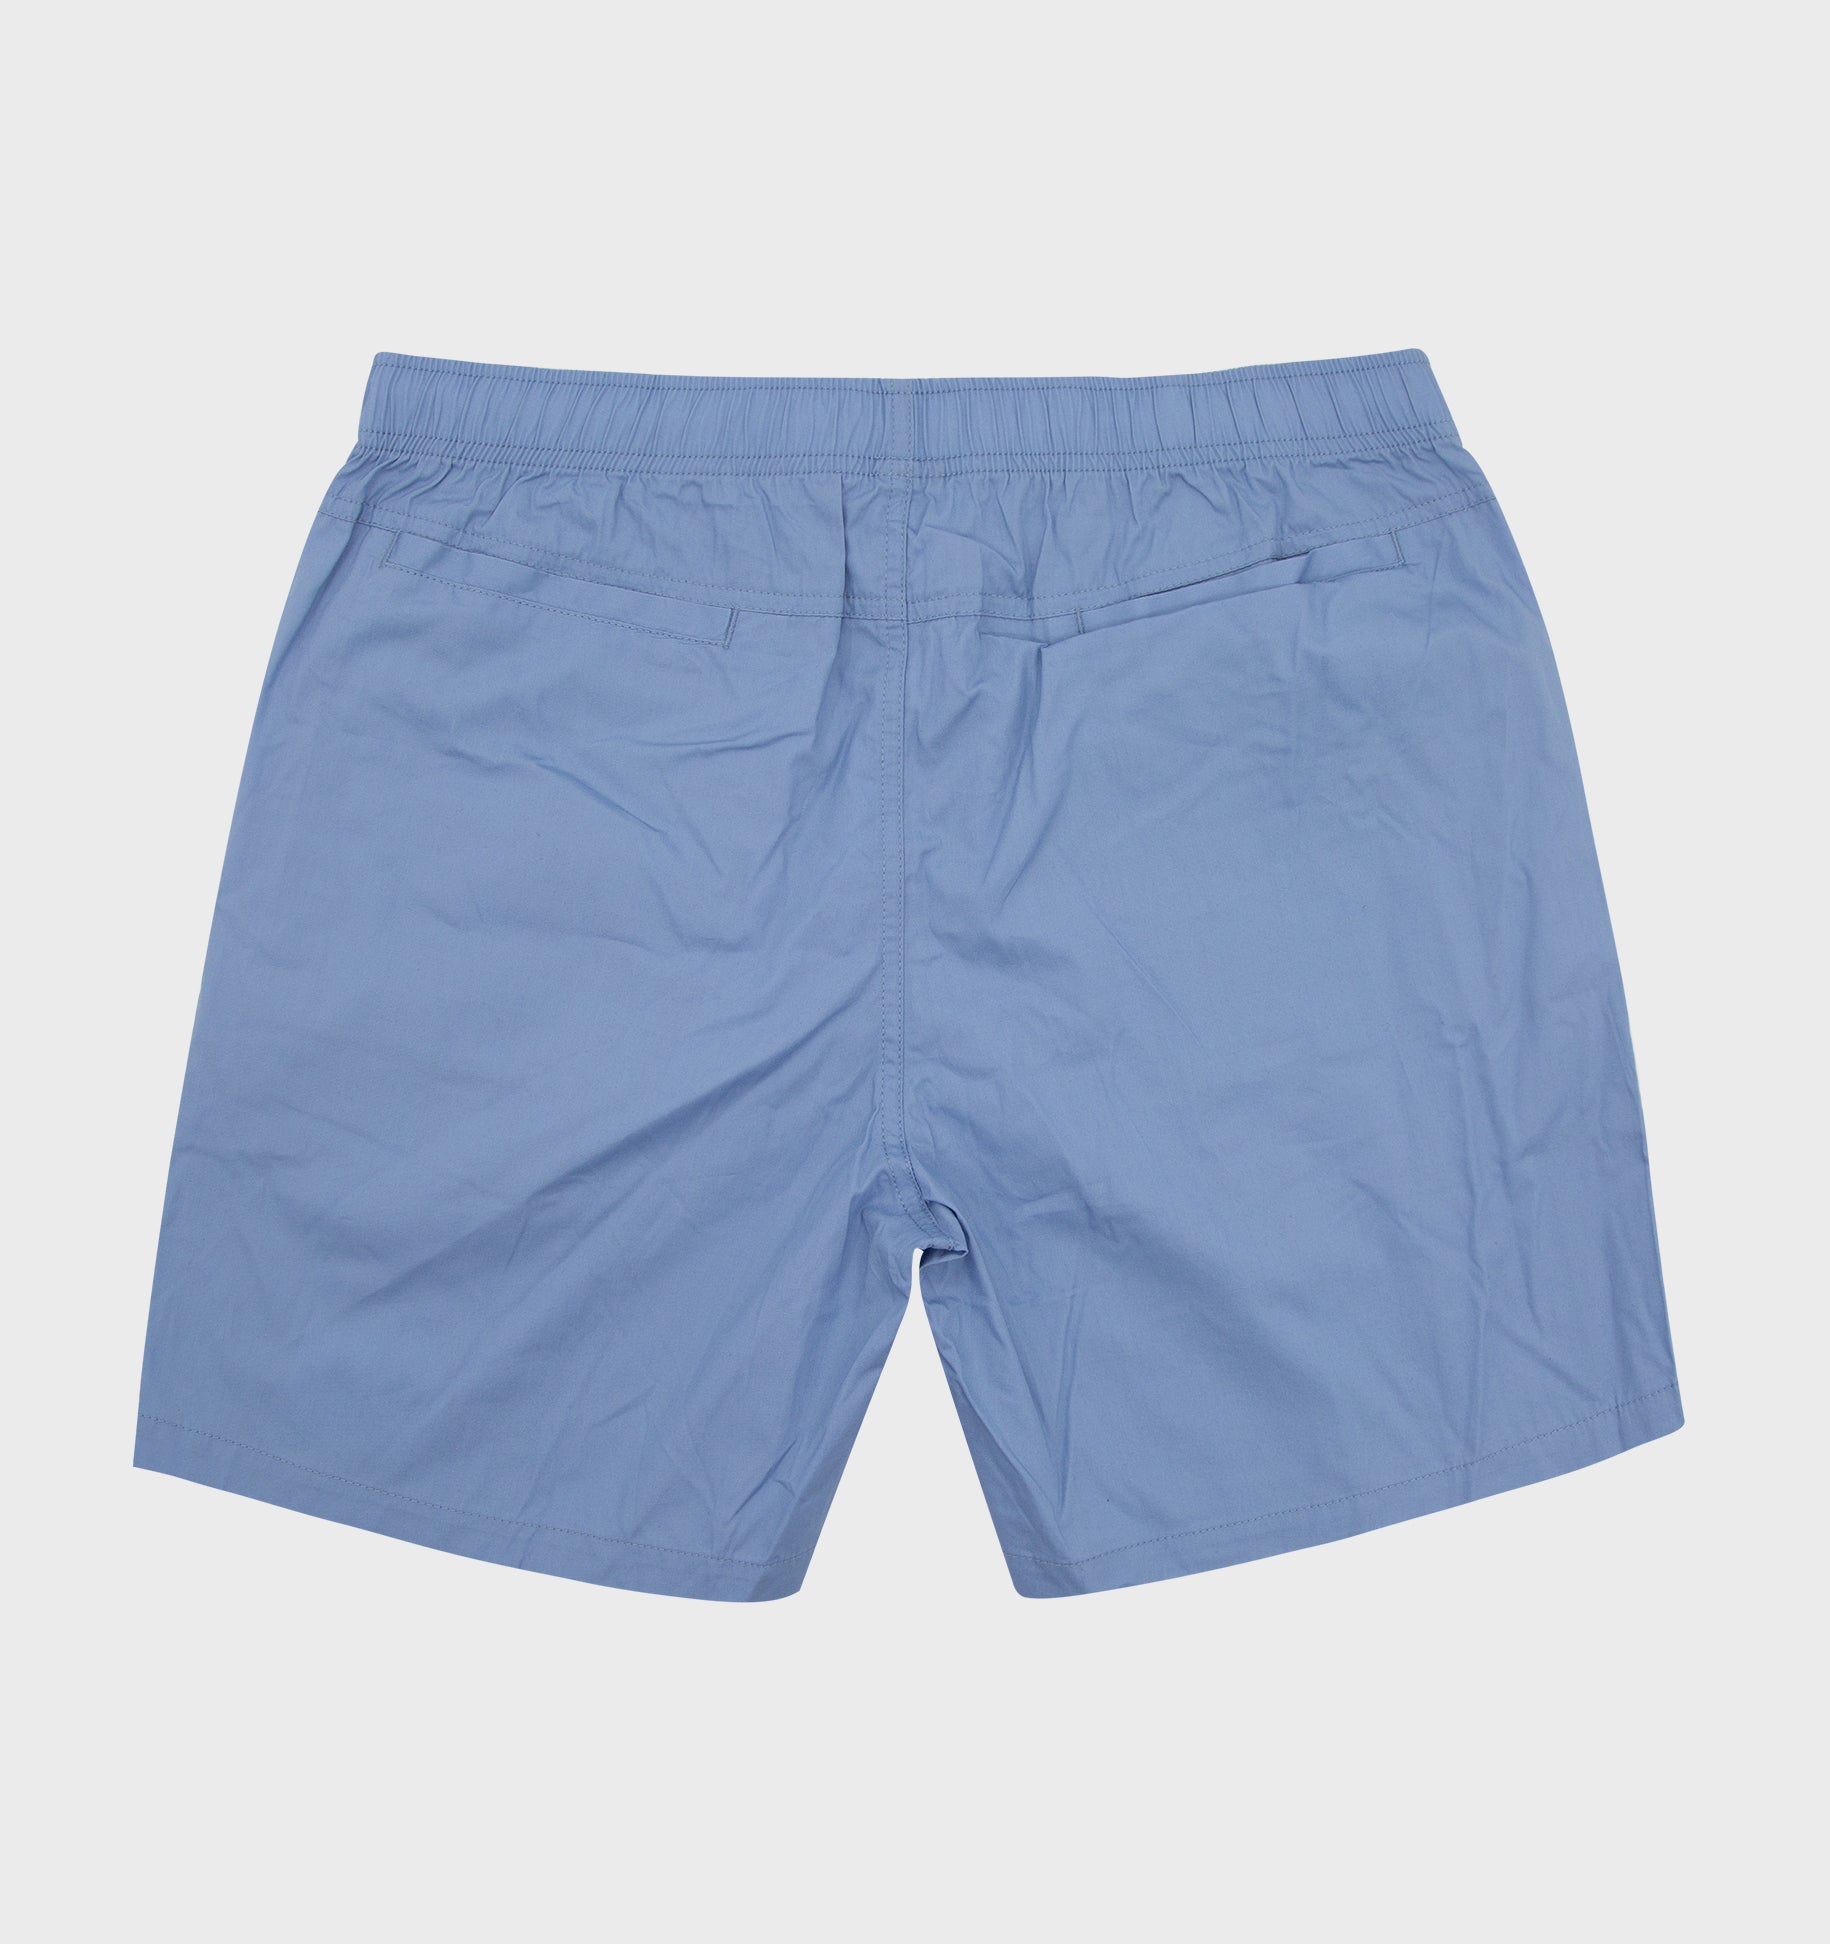 Gift Shop Shorts - Carolina Blue